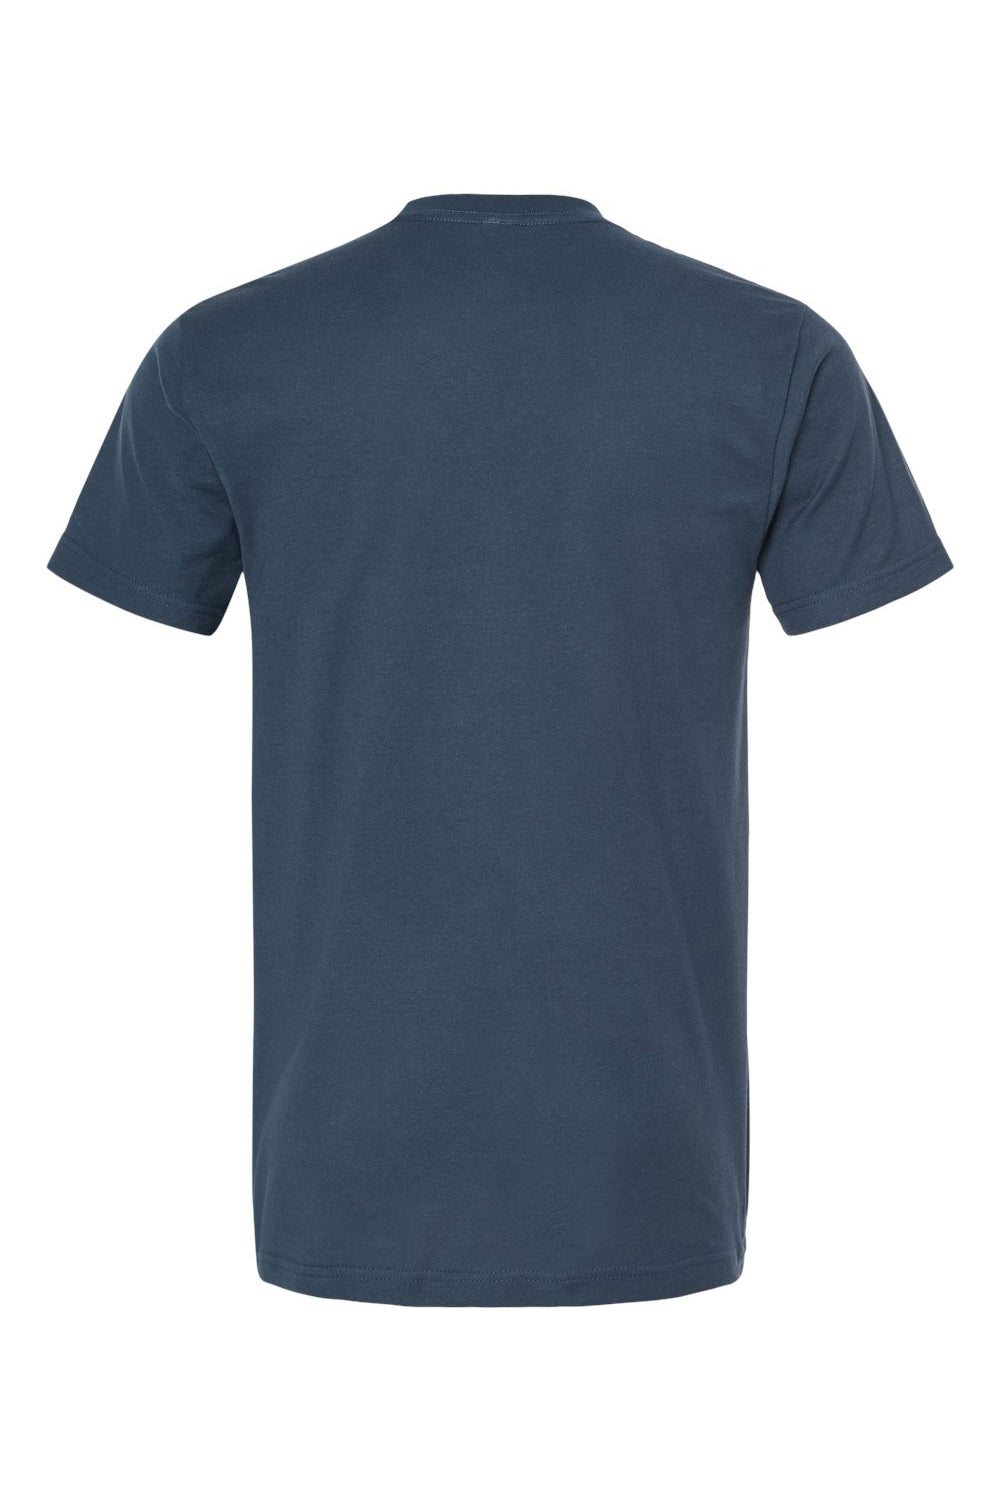 Tultex 202 Mens Fine Jersey Short Sleeve Crewneck T-Shirt Indigo Blue Flat Back